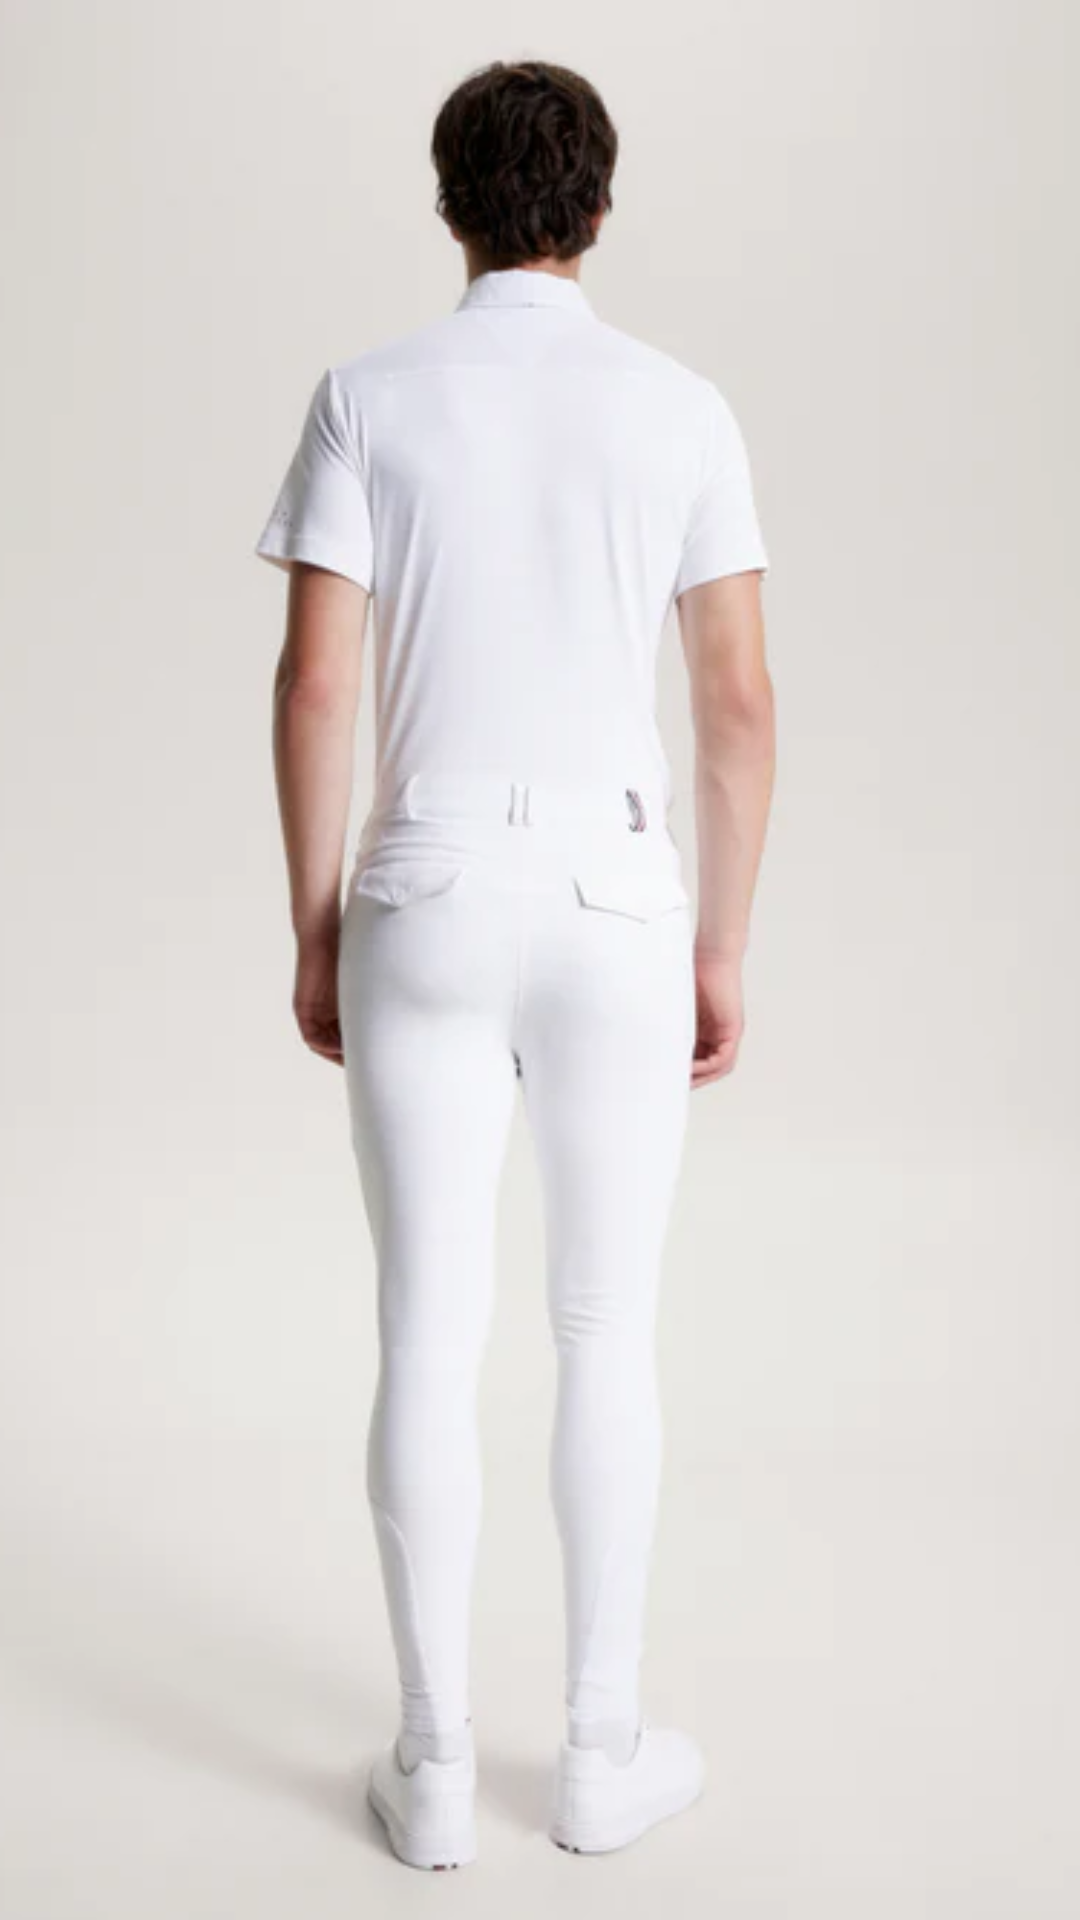 Nuovo Pantalone Uomo GENEVA | Tommy Hilfiger | El gaucho store